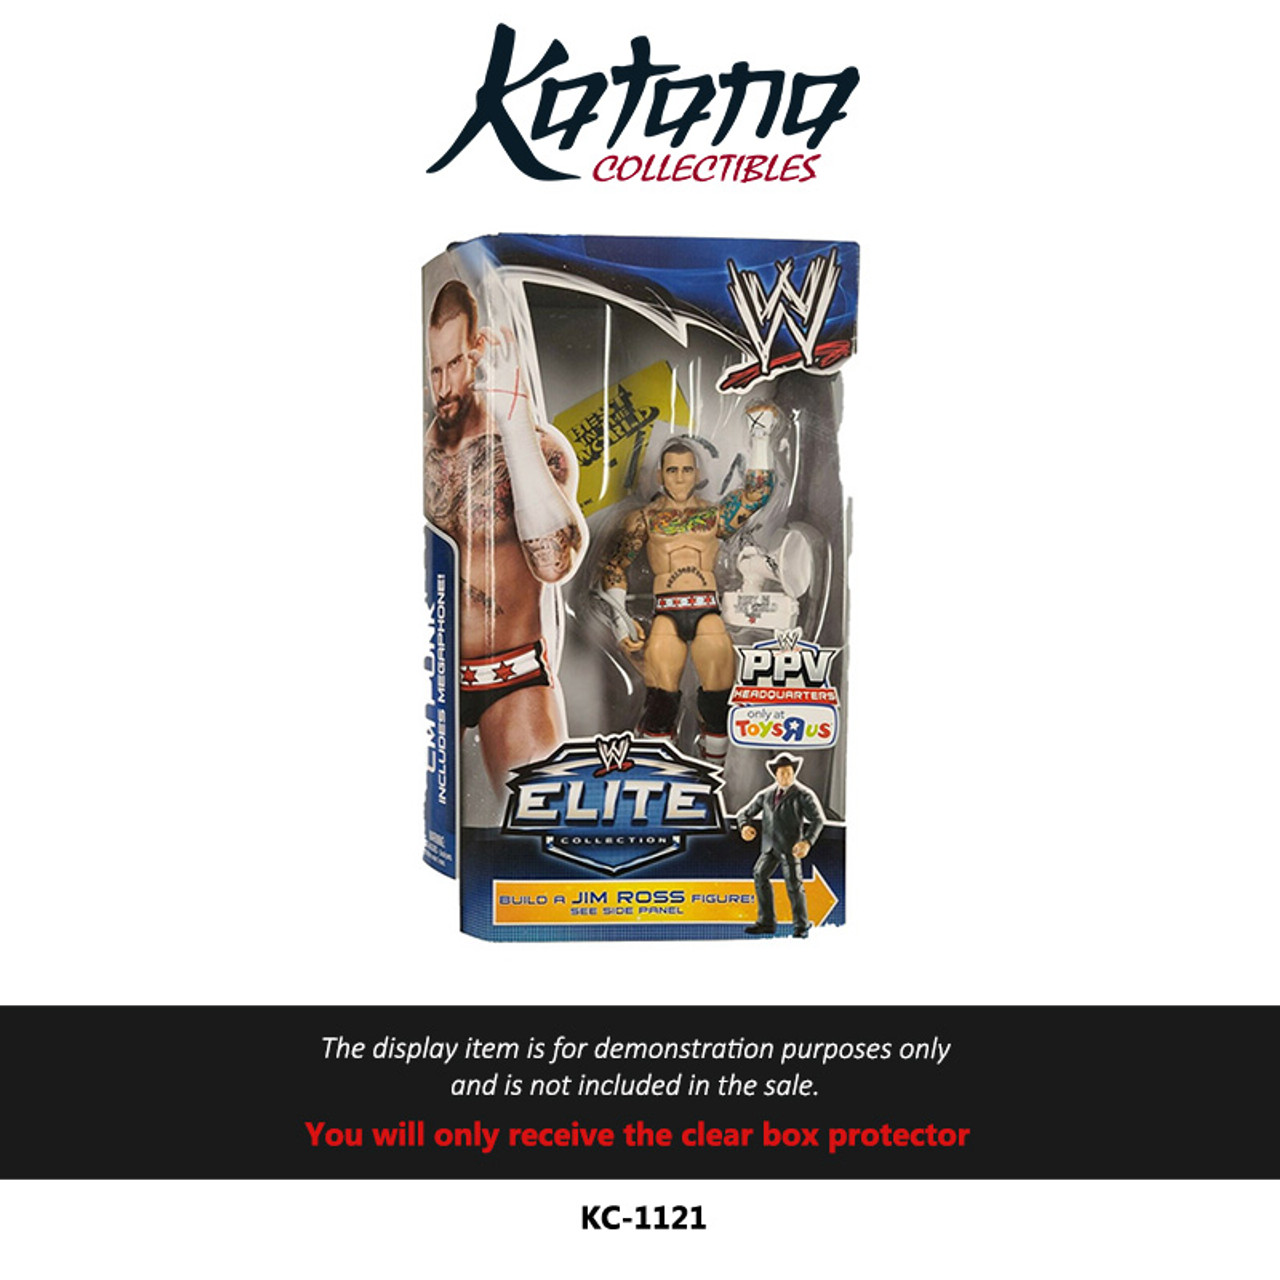 Katana Collectibles Protector For WWE ELITE 2013 CM PUNK